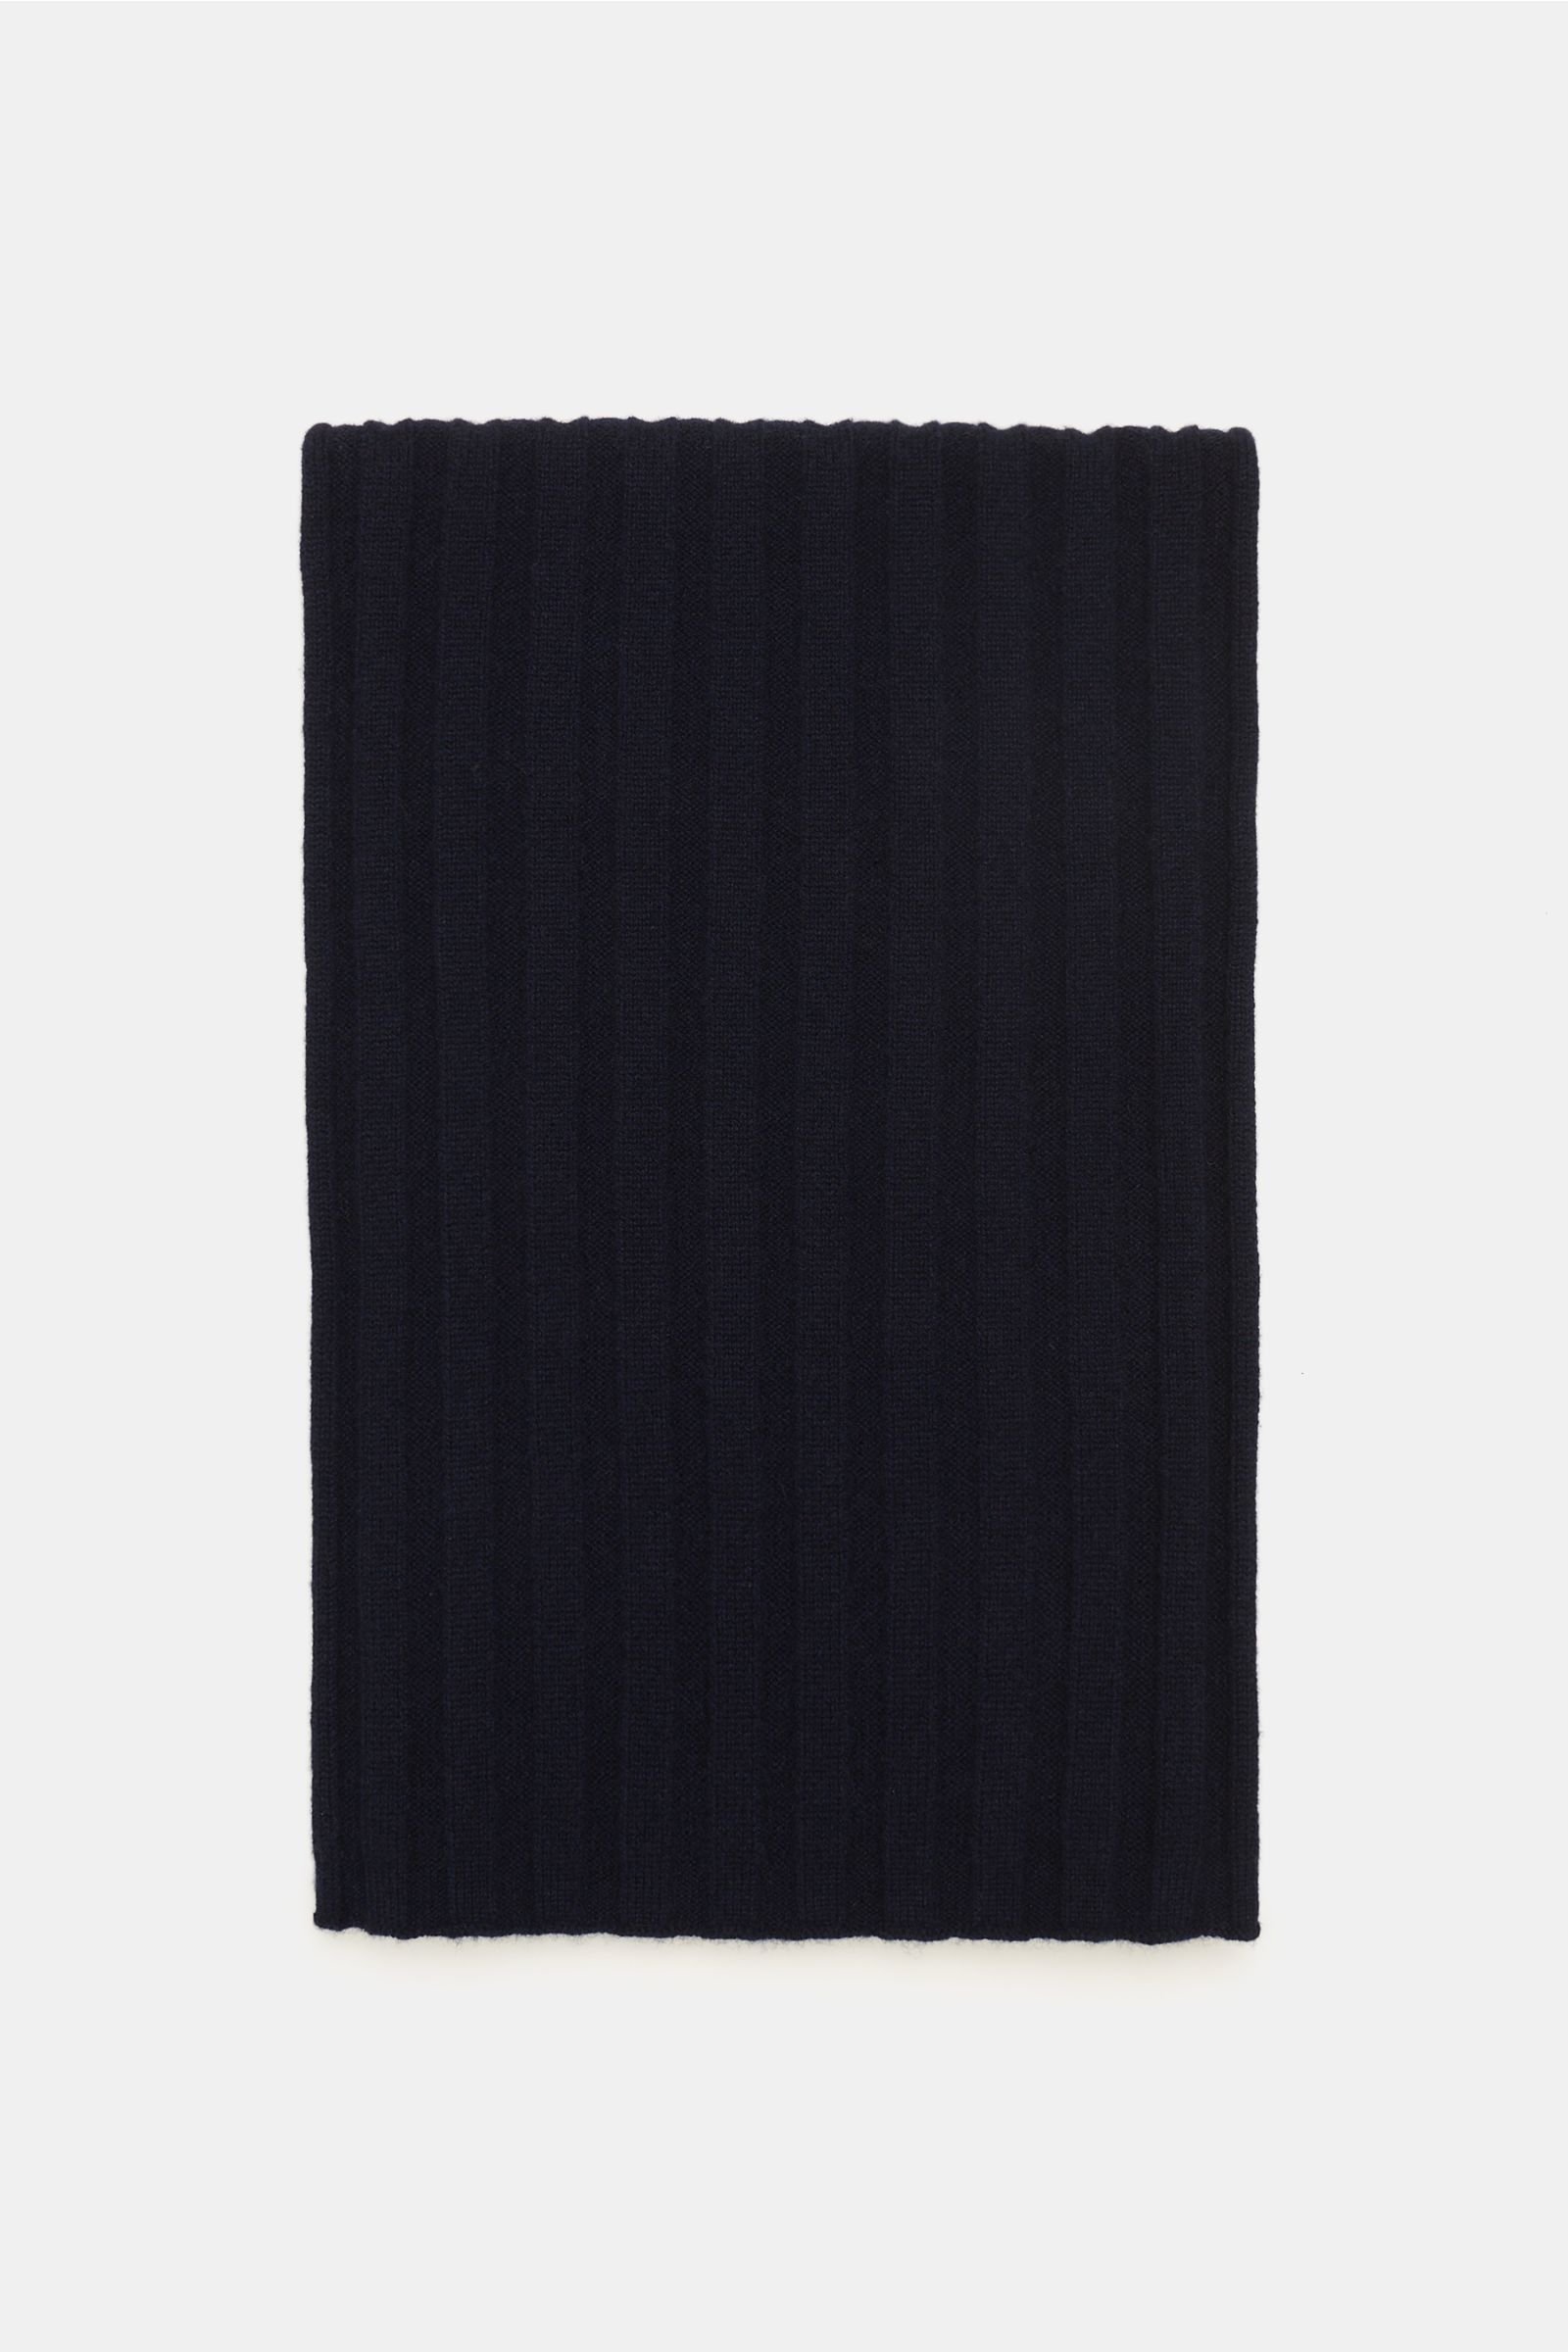 Cashmere scarf navy